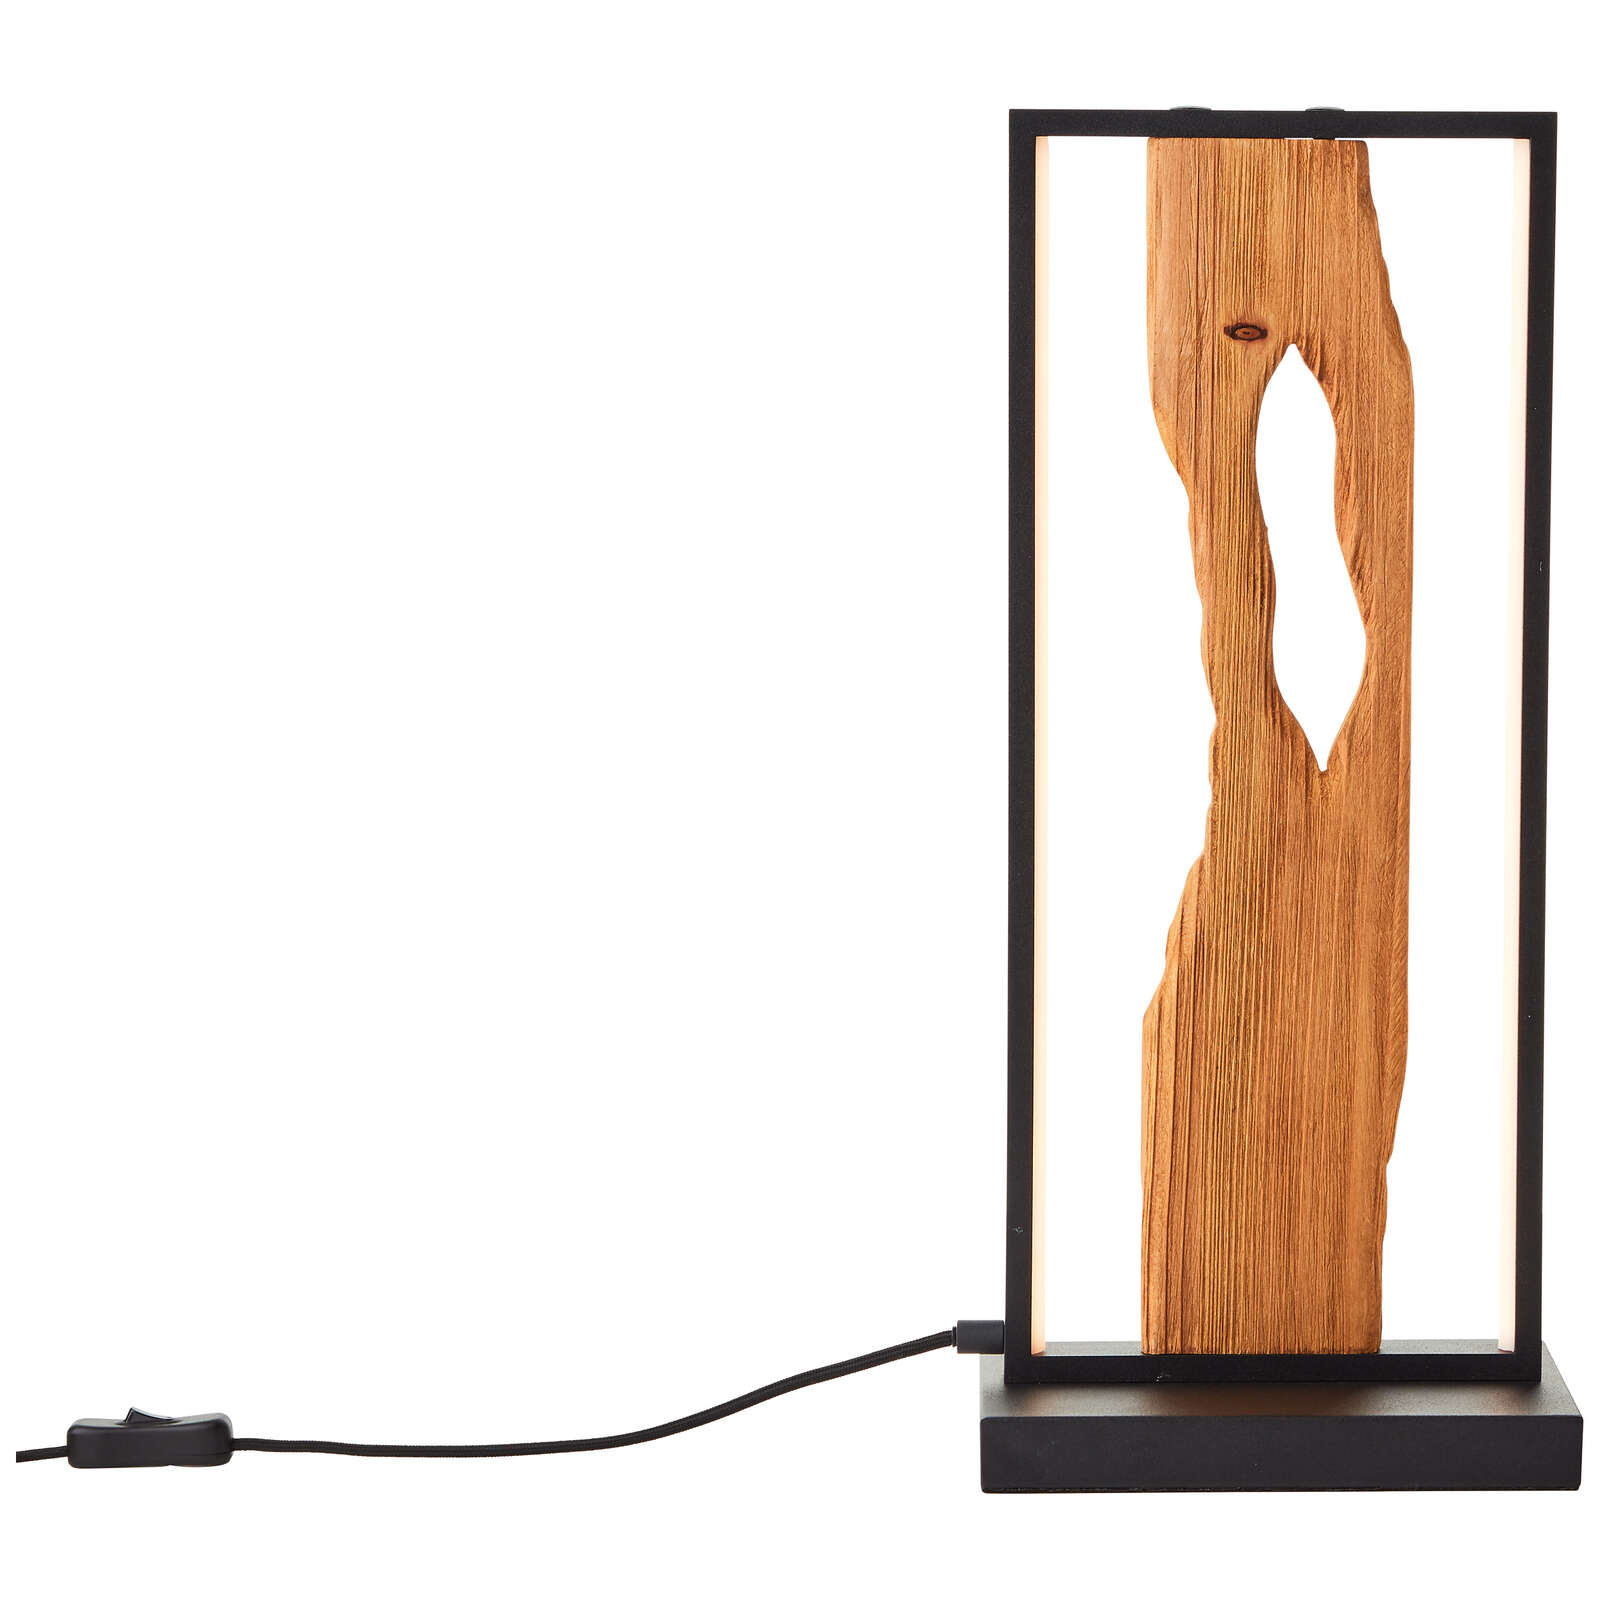             Wooden table lamp - Elea 3 - Brown
        